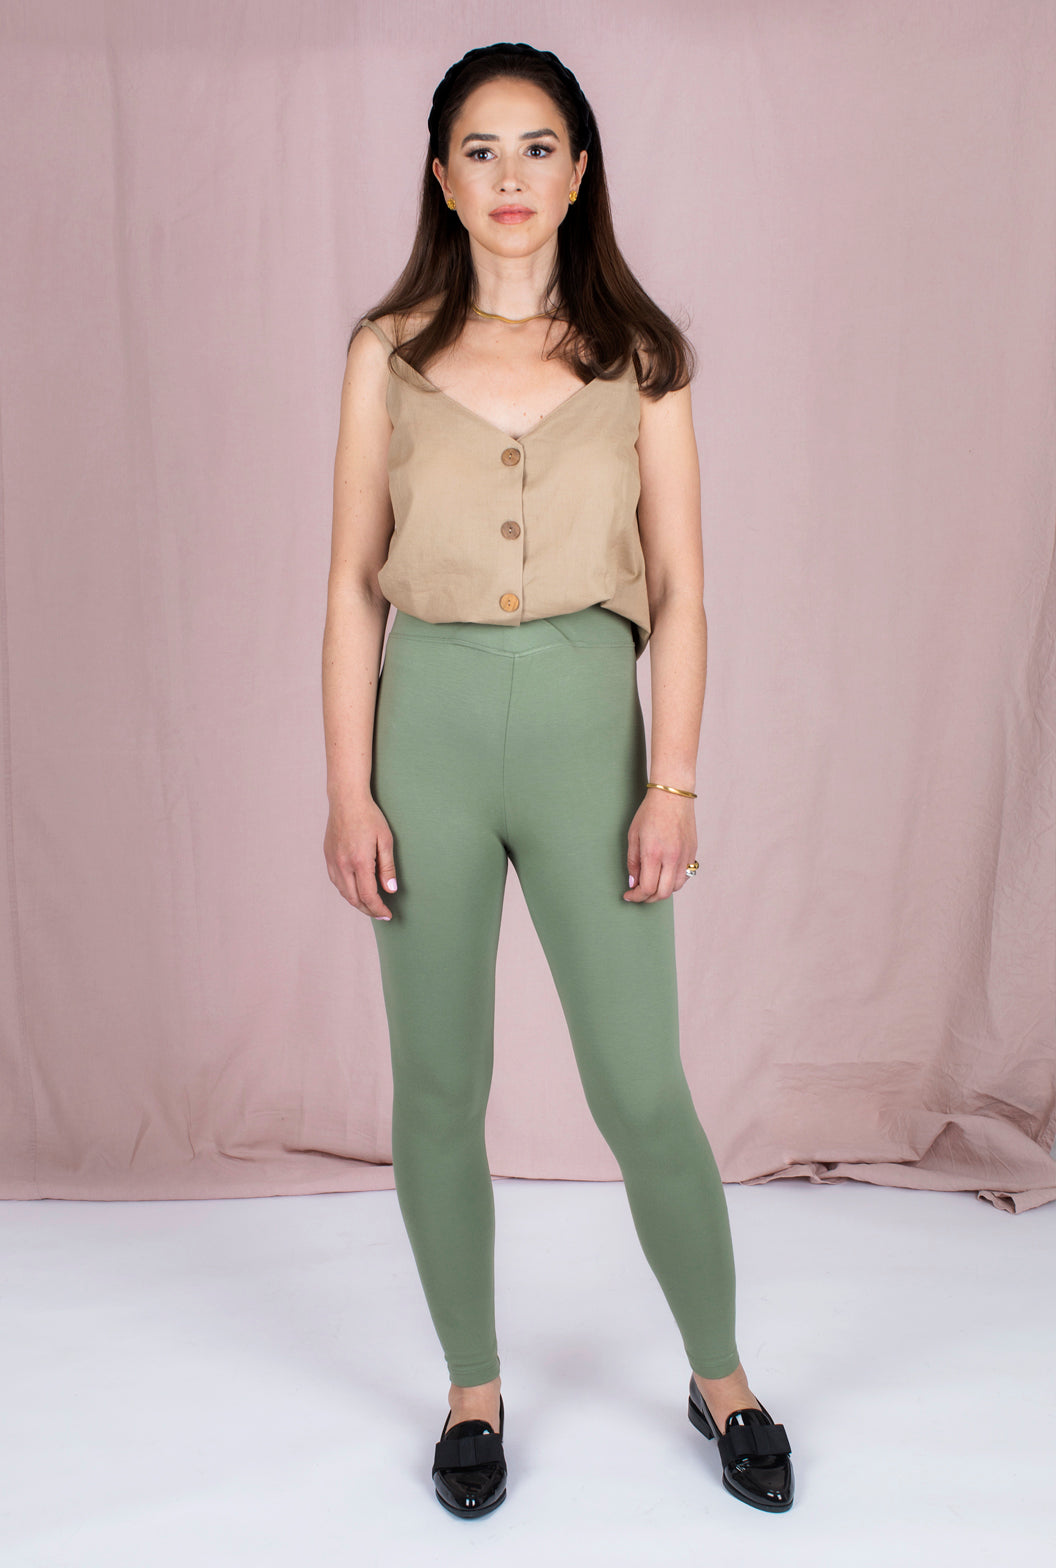 Sample - Astrid tight leggings, Bright Olive